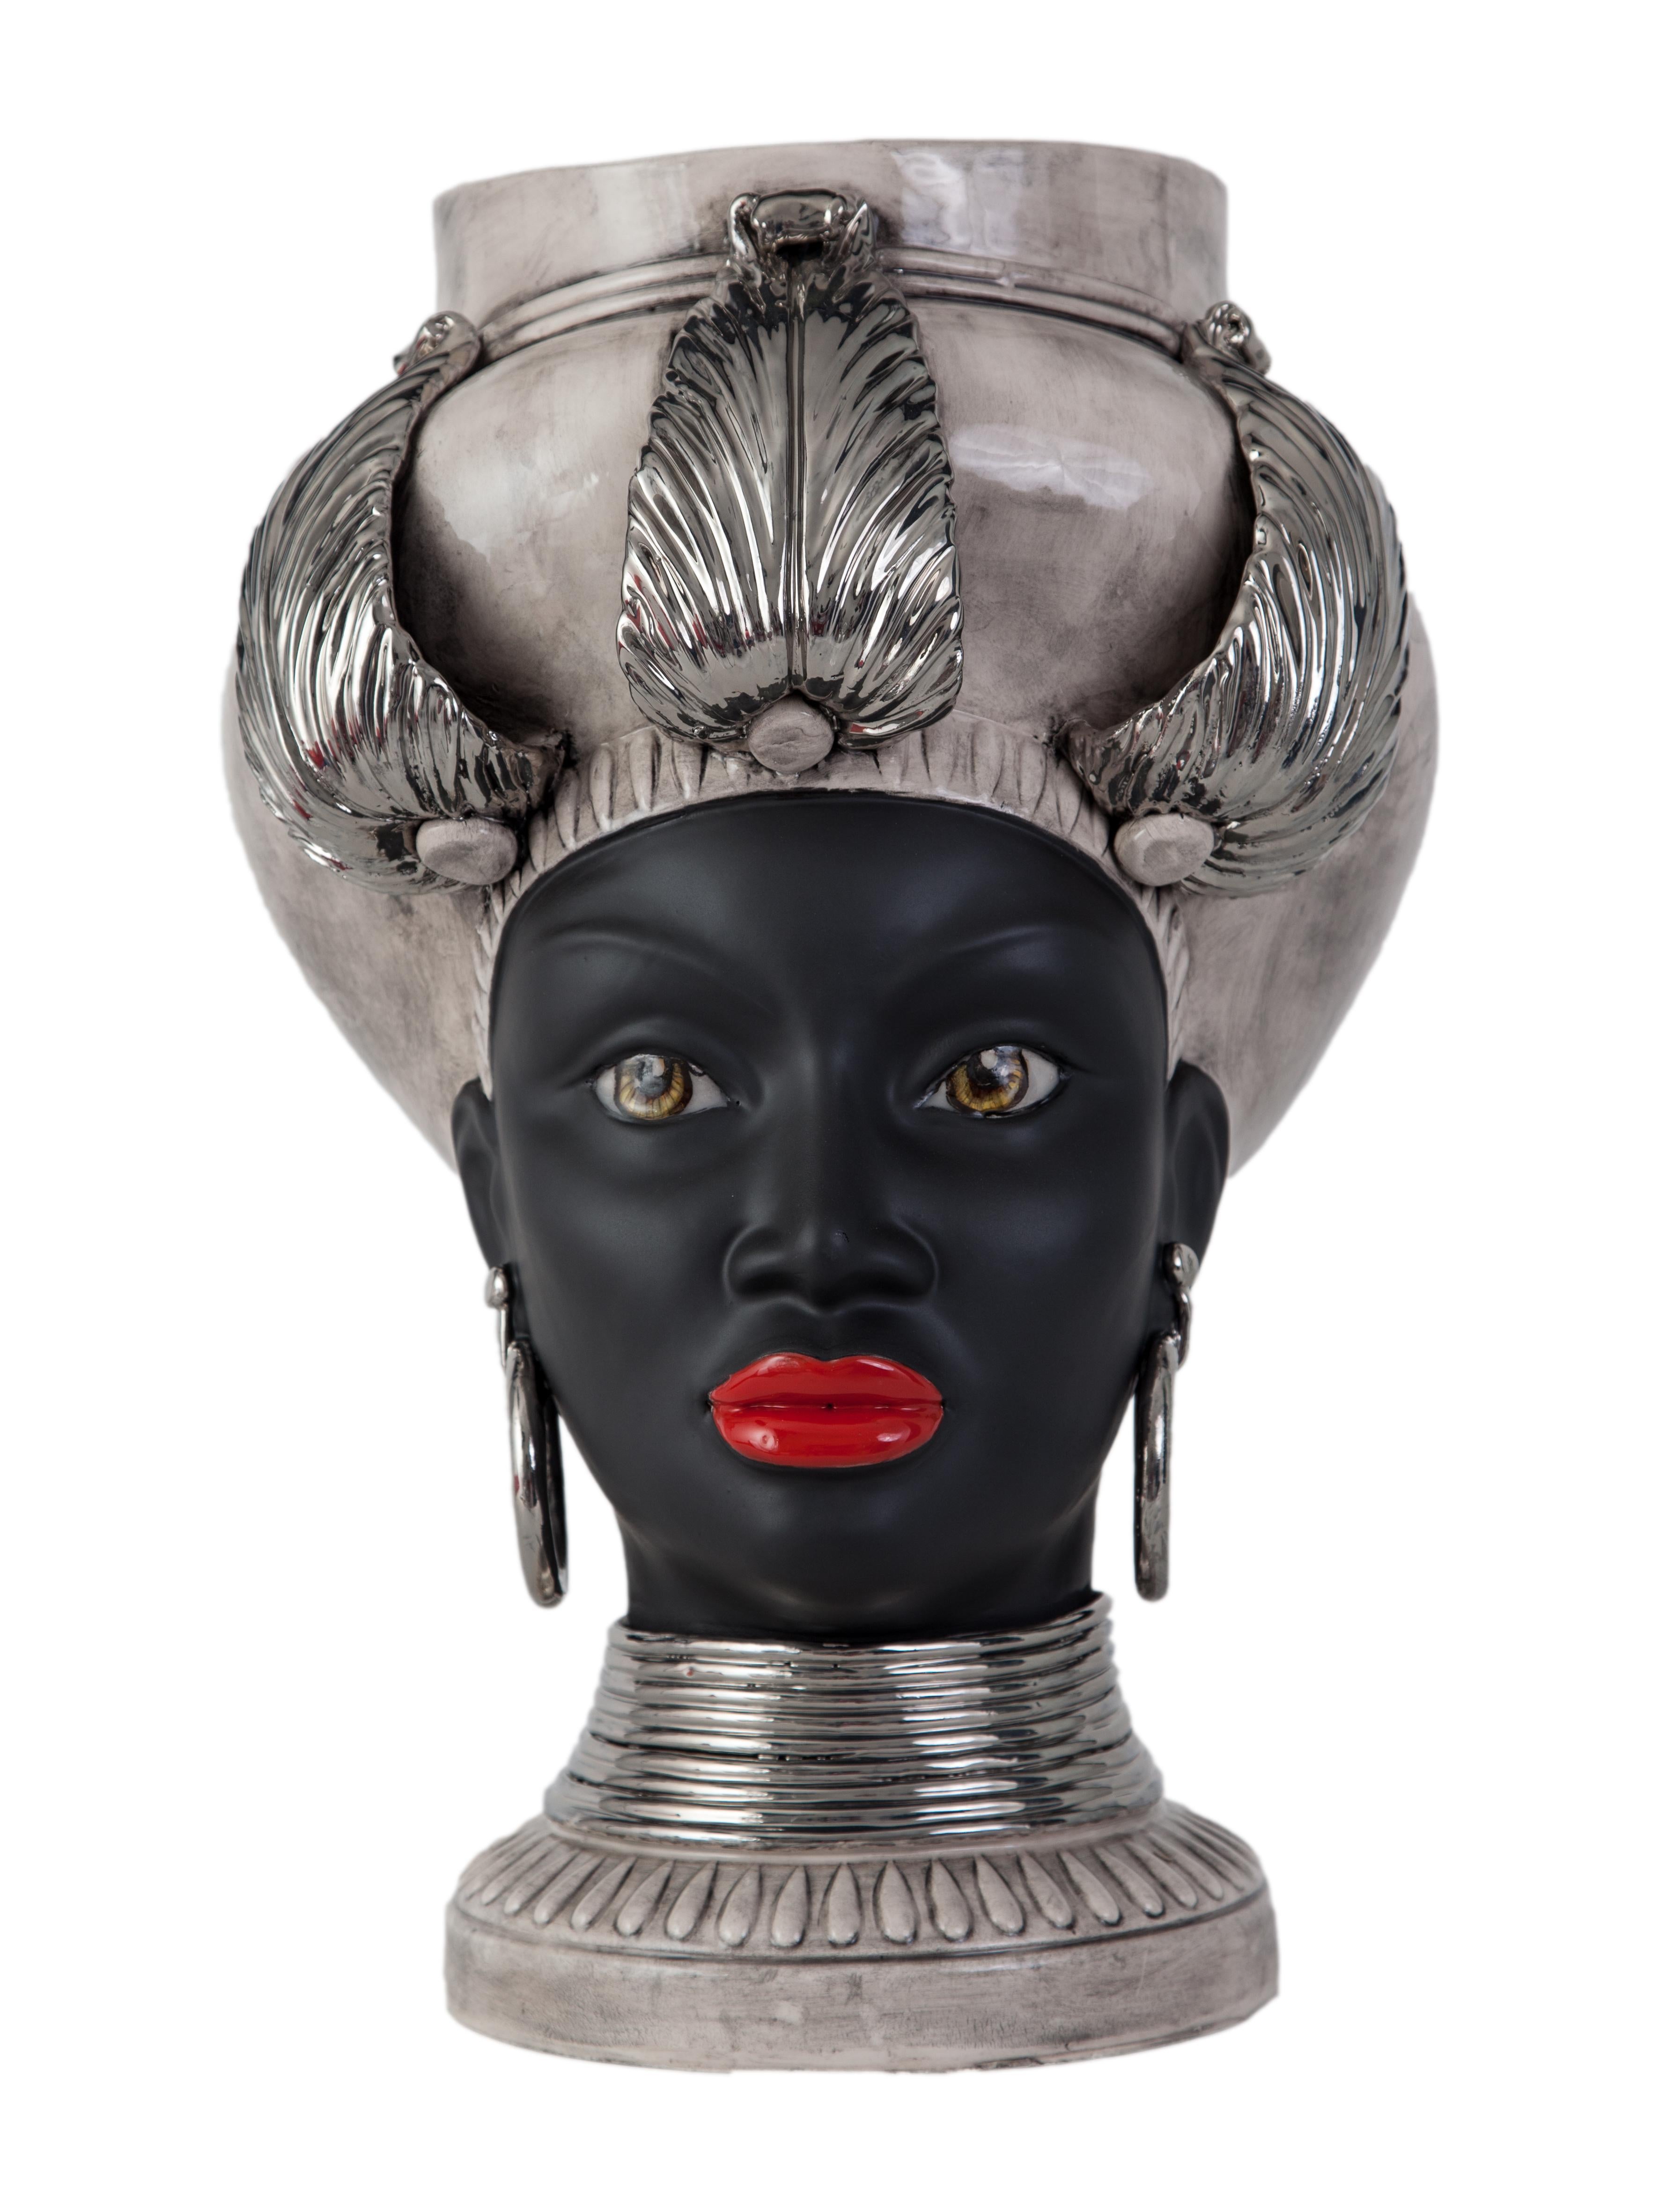 ISIDE I12, Man's Moorish Head, Handmade in Sicily, 2021 Centerpiece Size M Vase For Sale 11